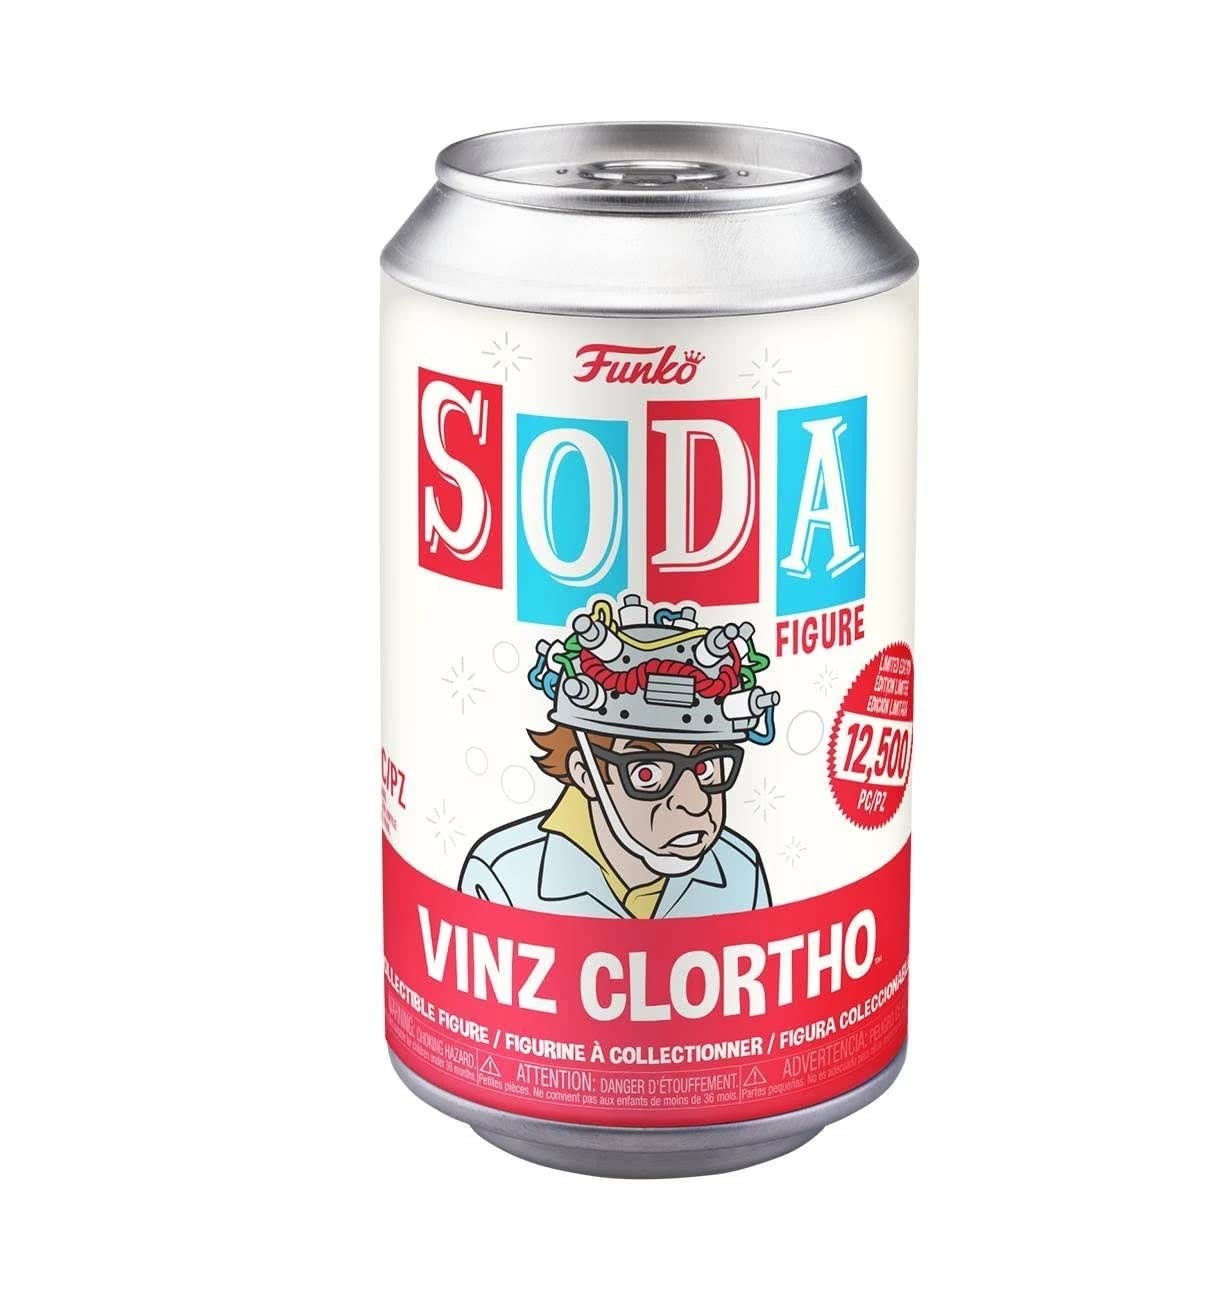 Funko Soda: Ghostbusters Vinz Clortho 4.25" Figure in a Can